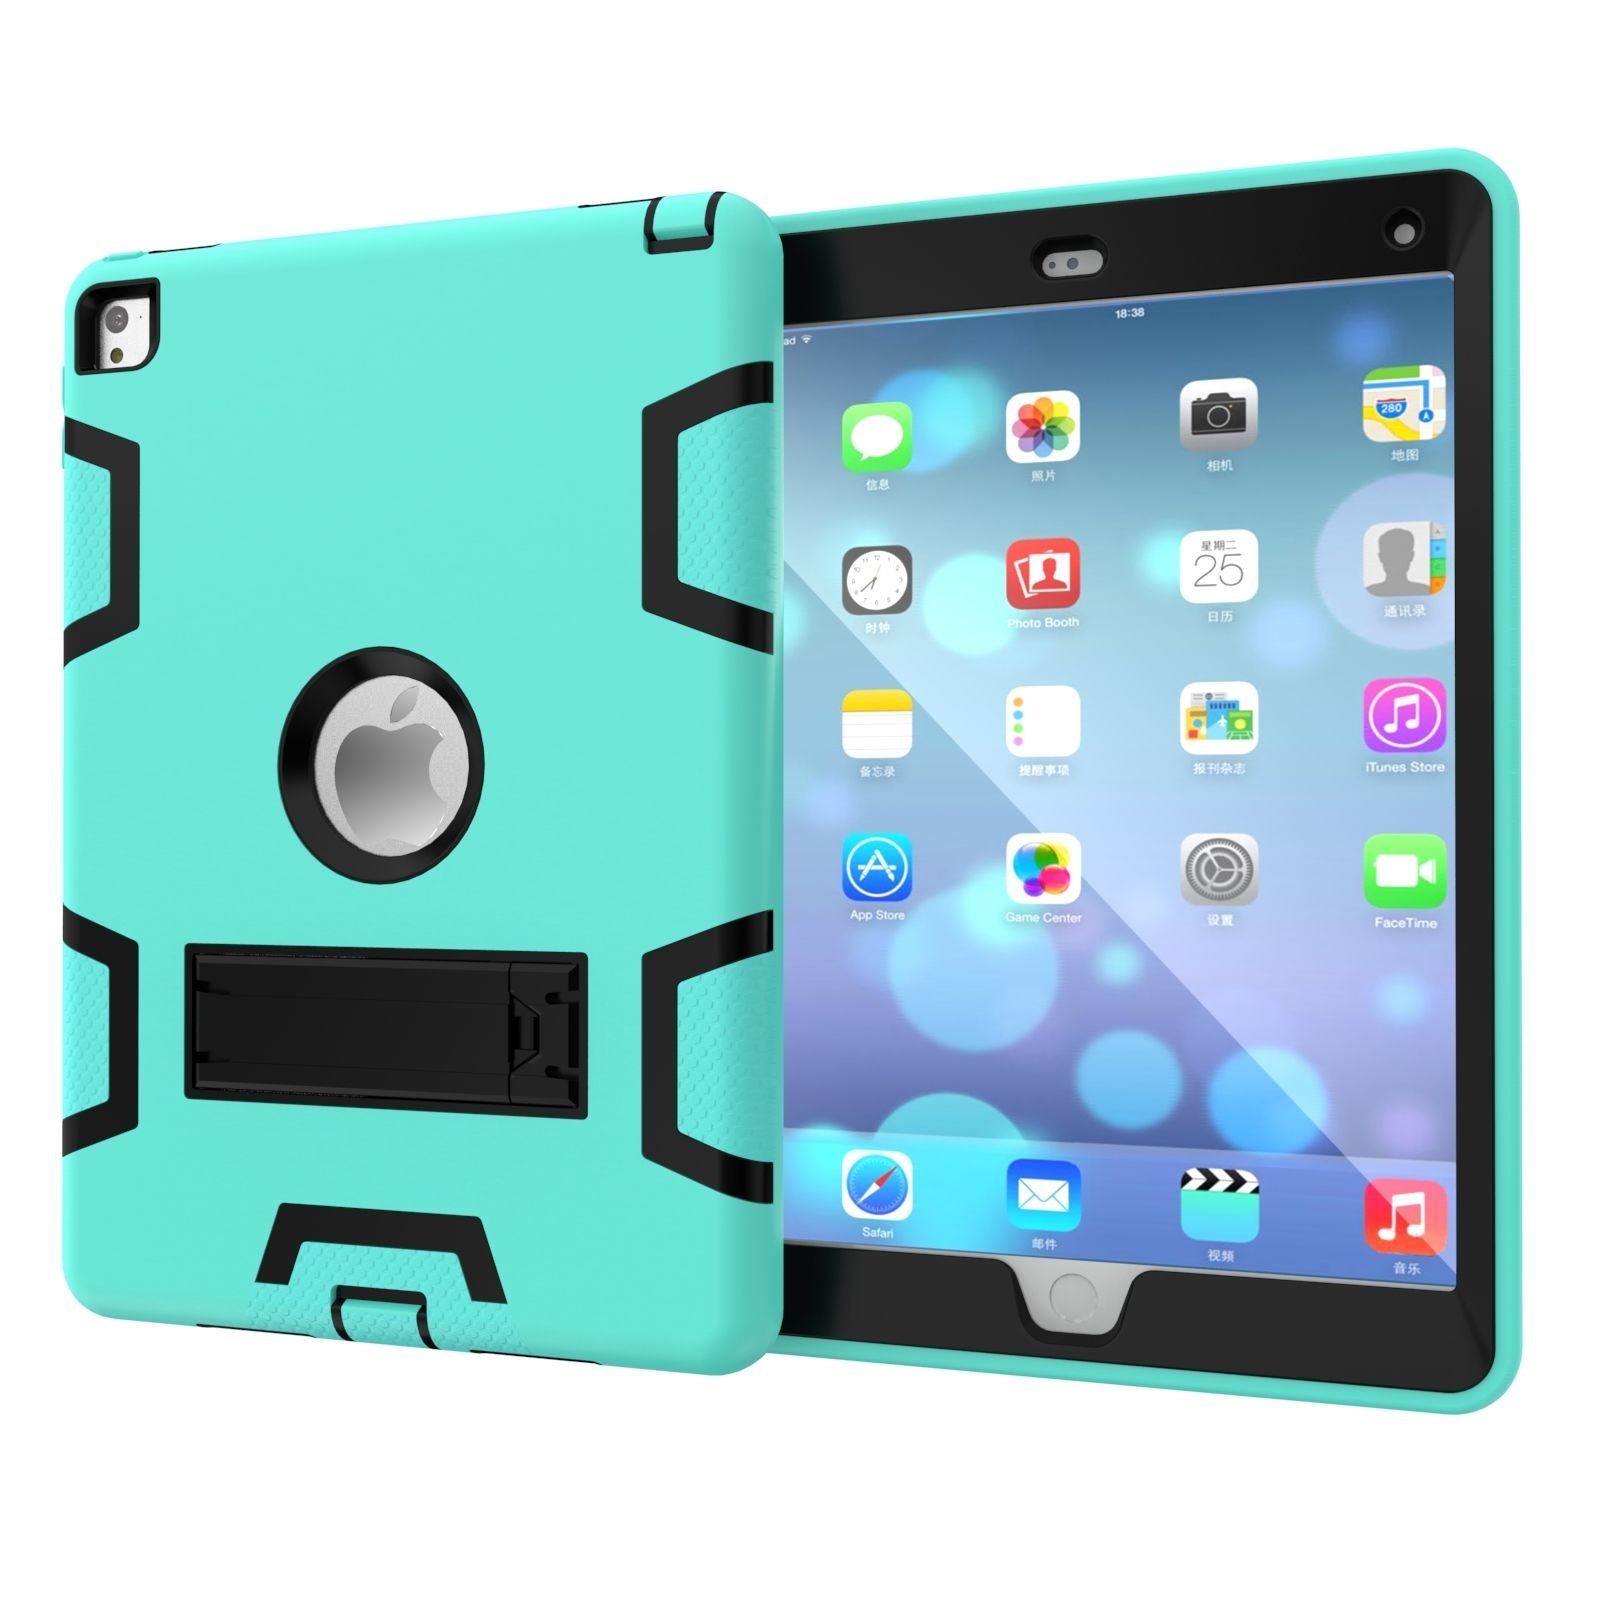 iPad 2 Case Hybrid Heavy Duty Shockproof Armor Kid Safe Case - The Shopsite